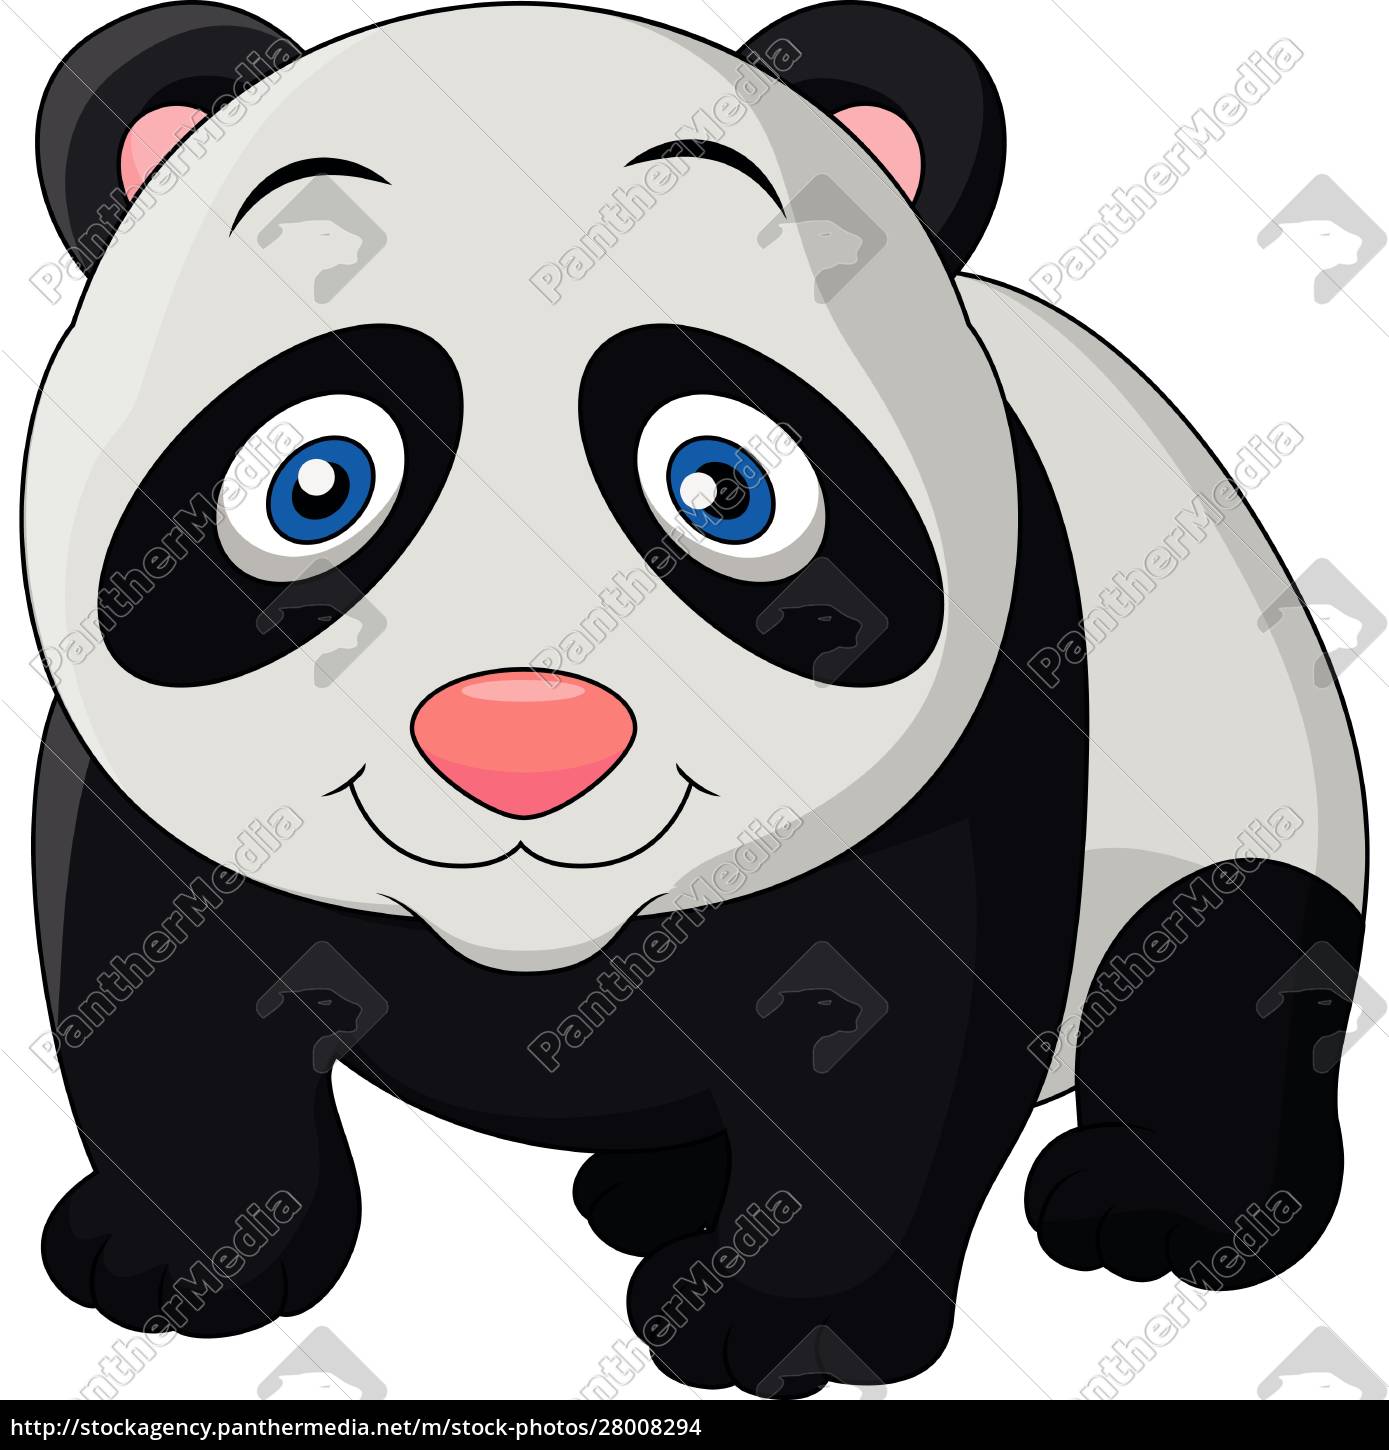 Desenho fofo do bebê panda - Stockphoto #28008294